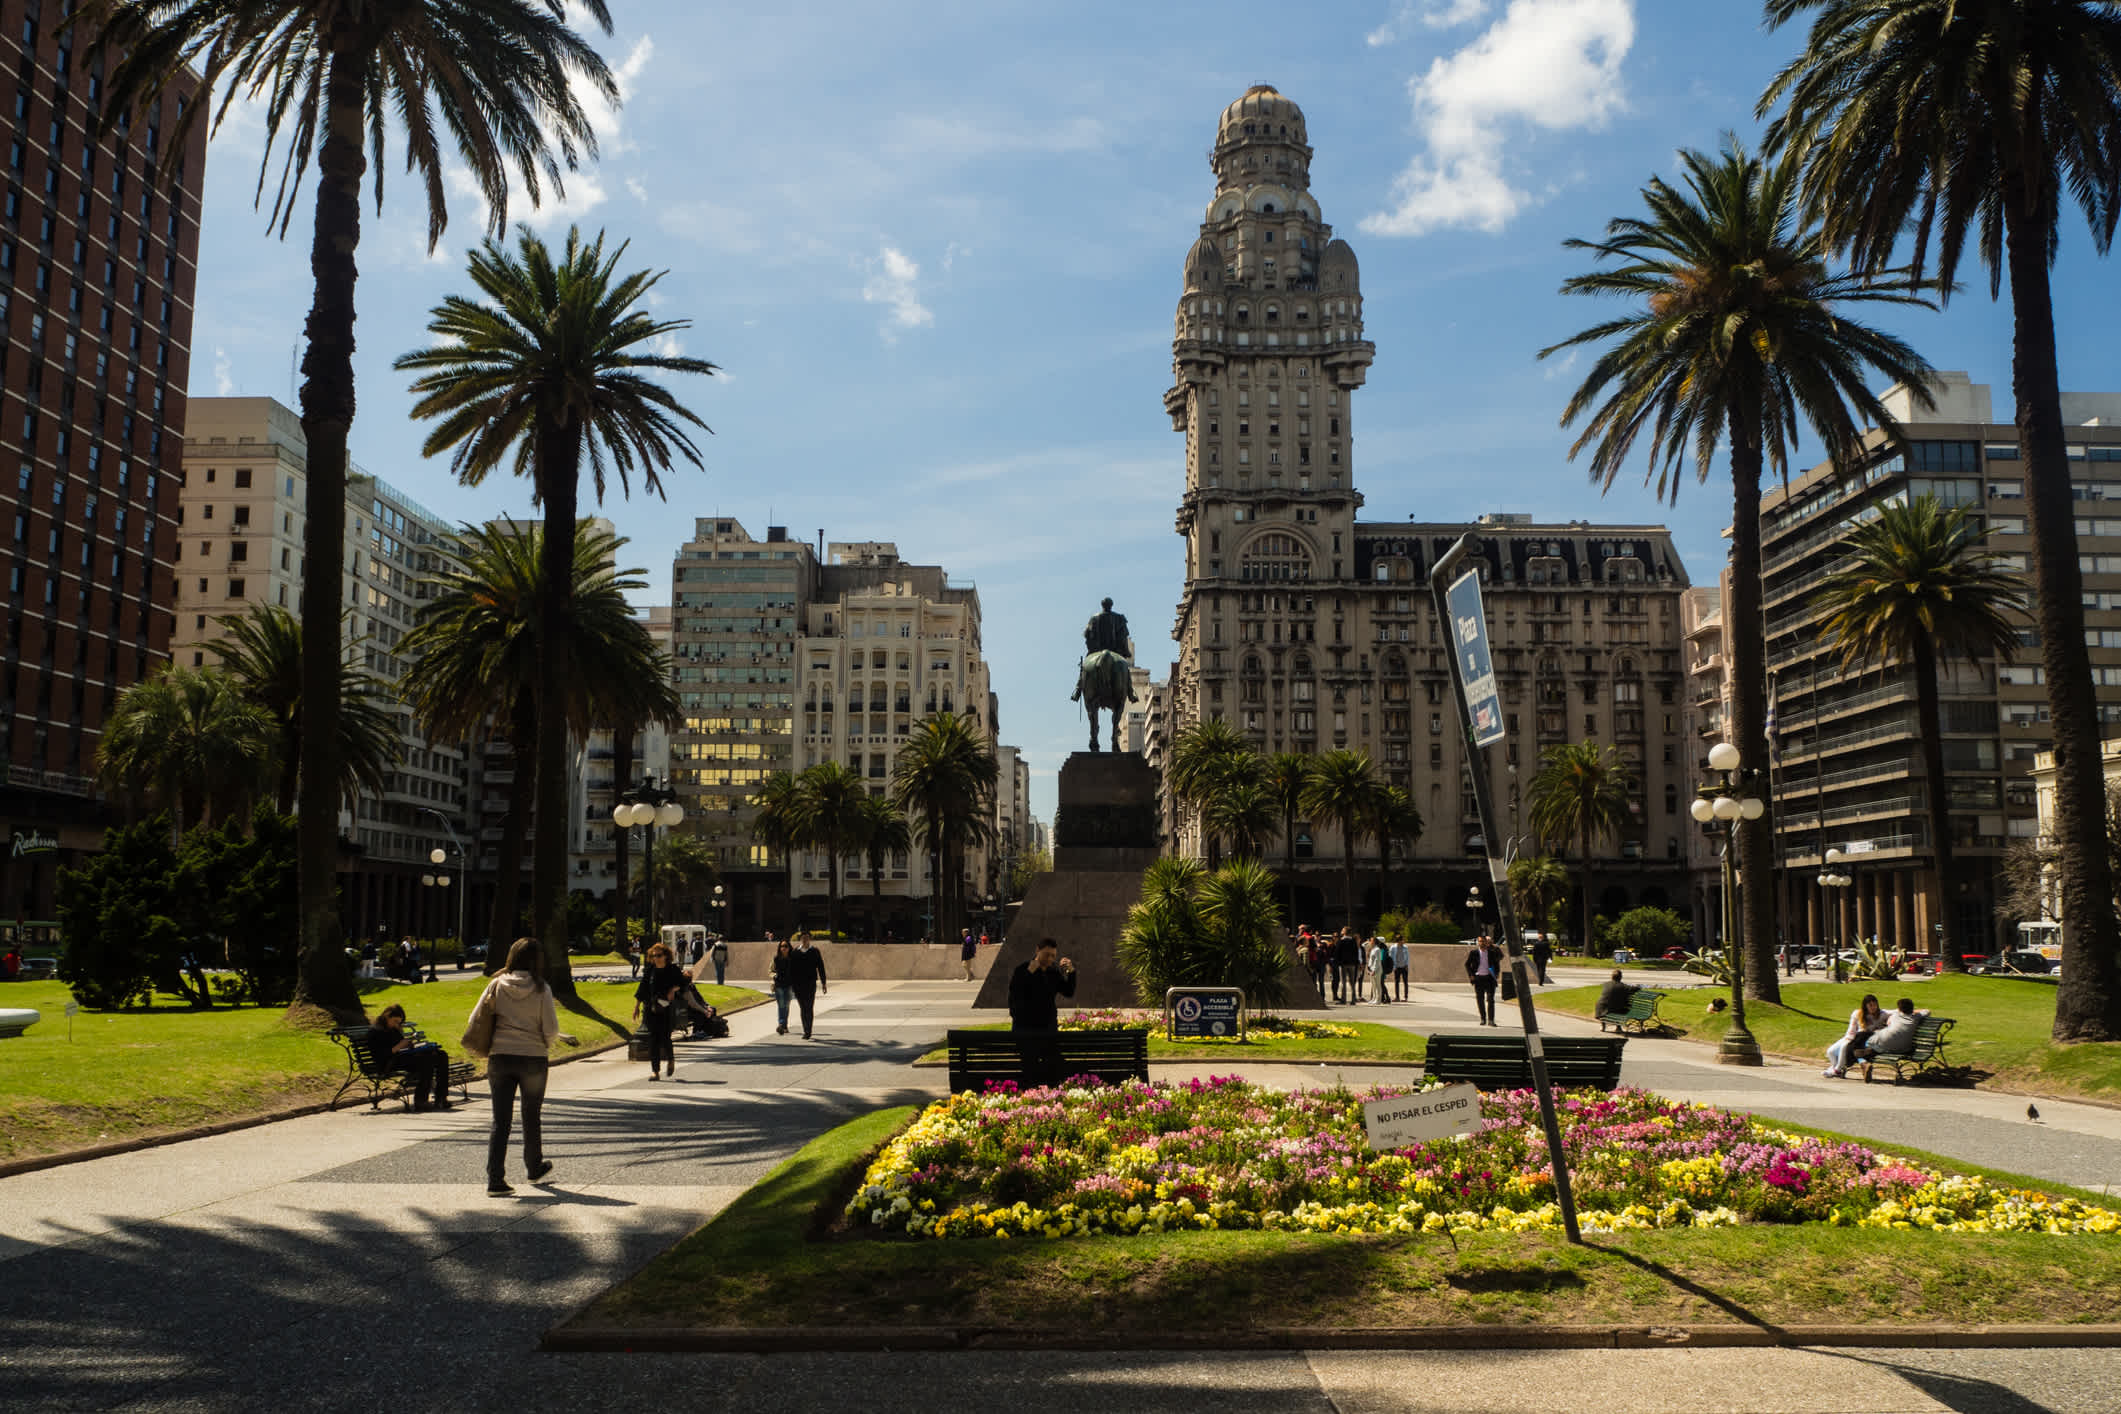 Blick auf dem Hauptplatz in Montevideo mit Salvo-Palast, Uruguay

